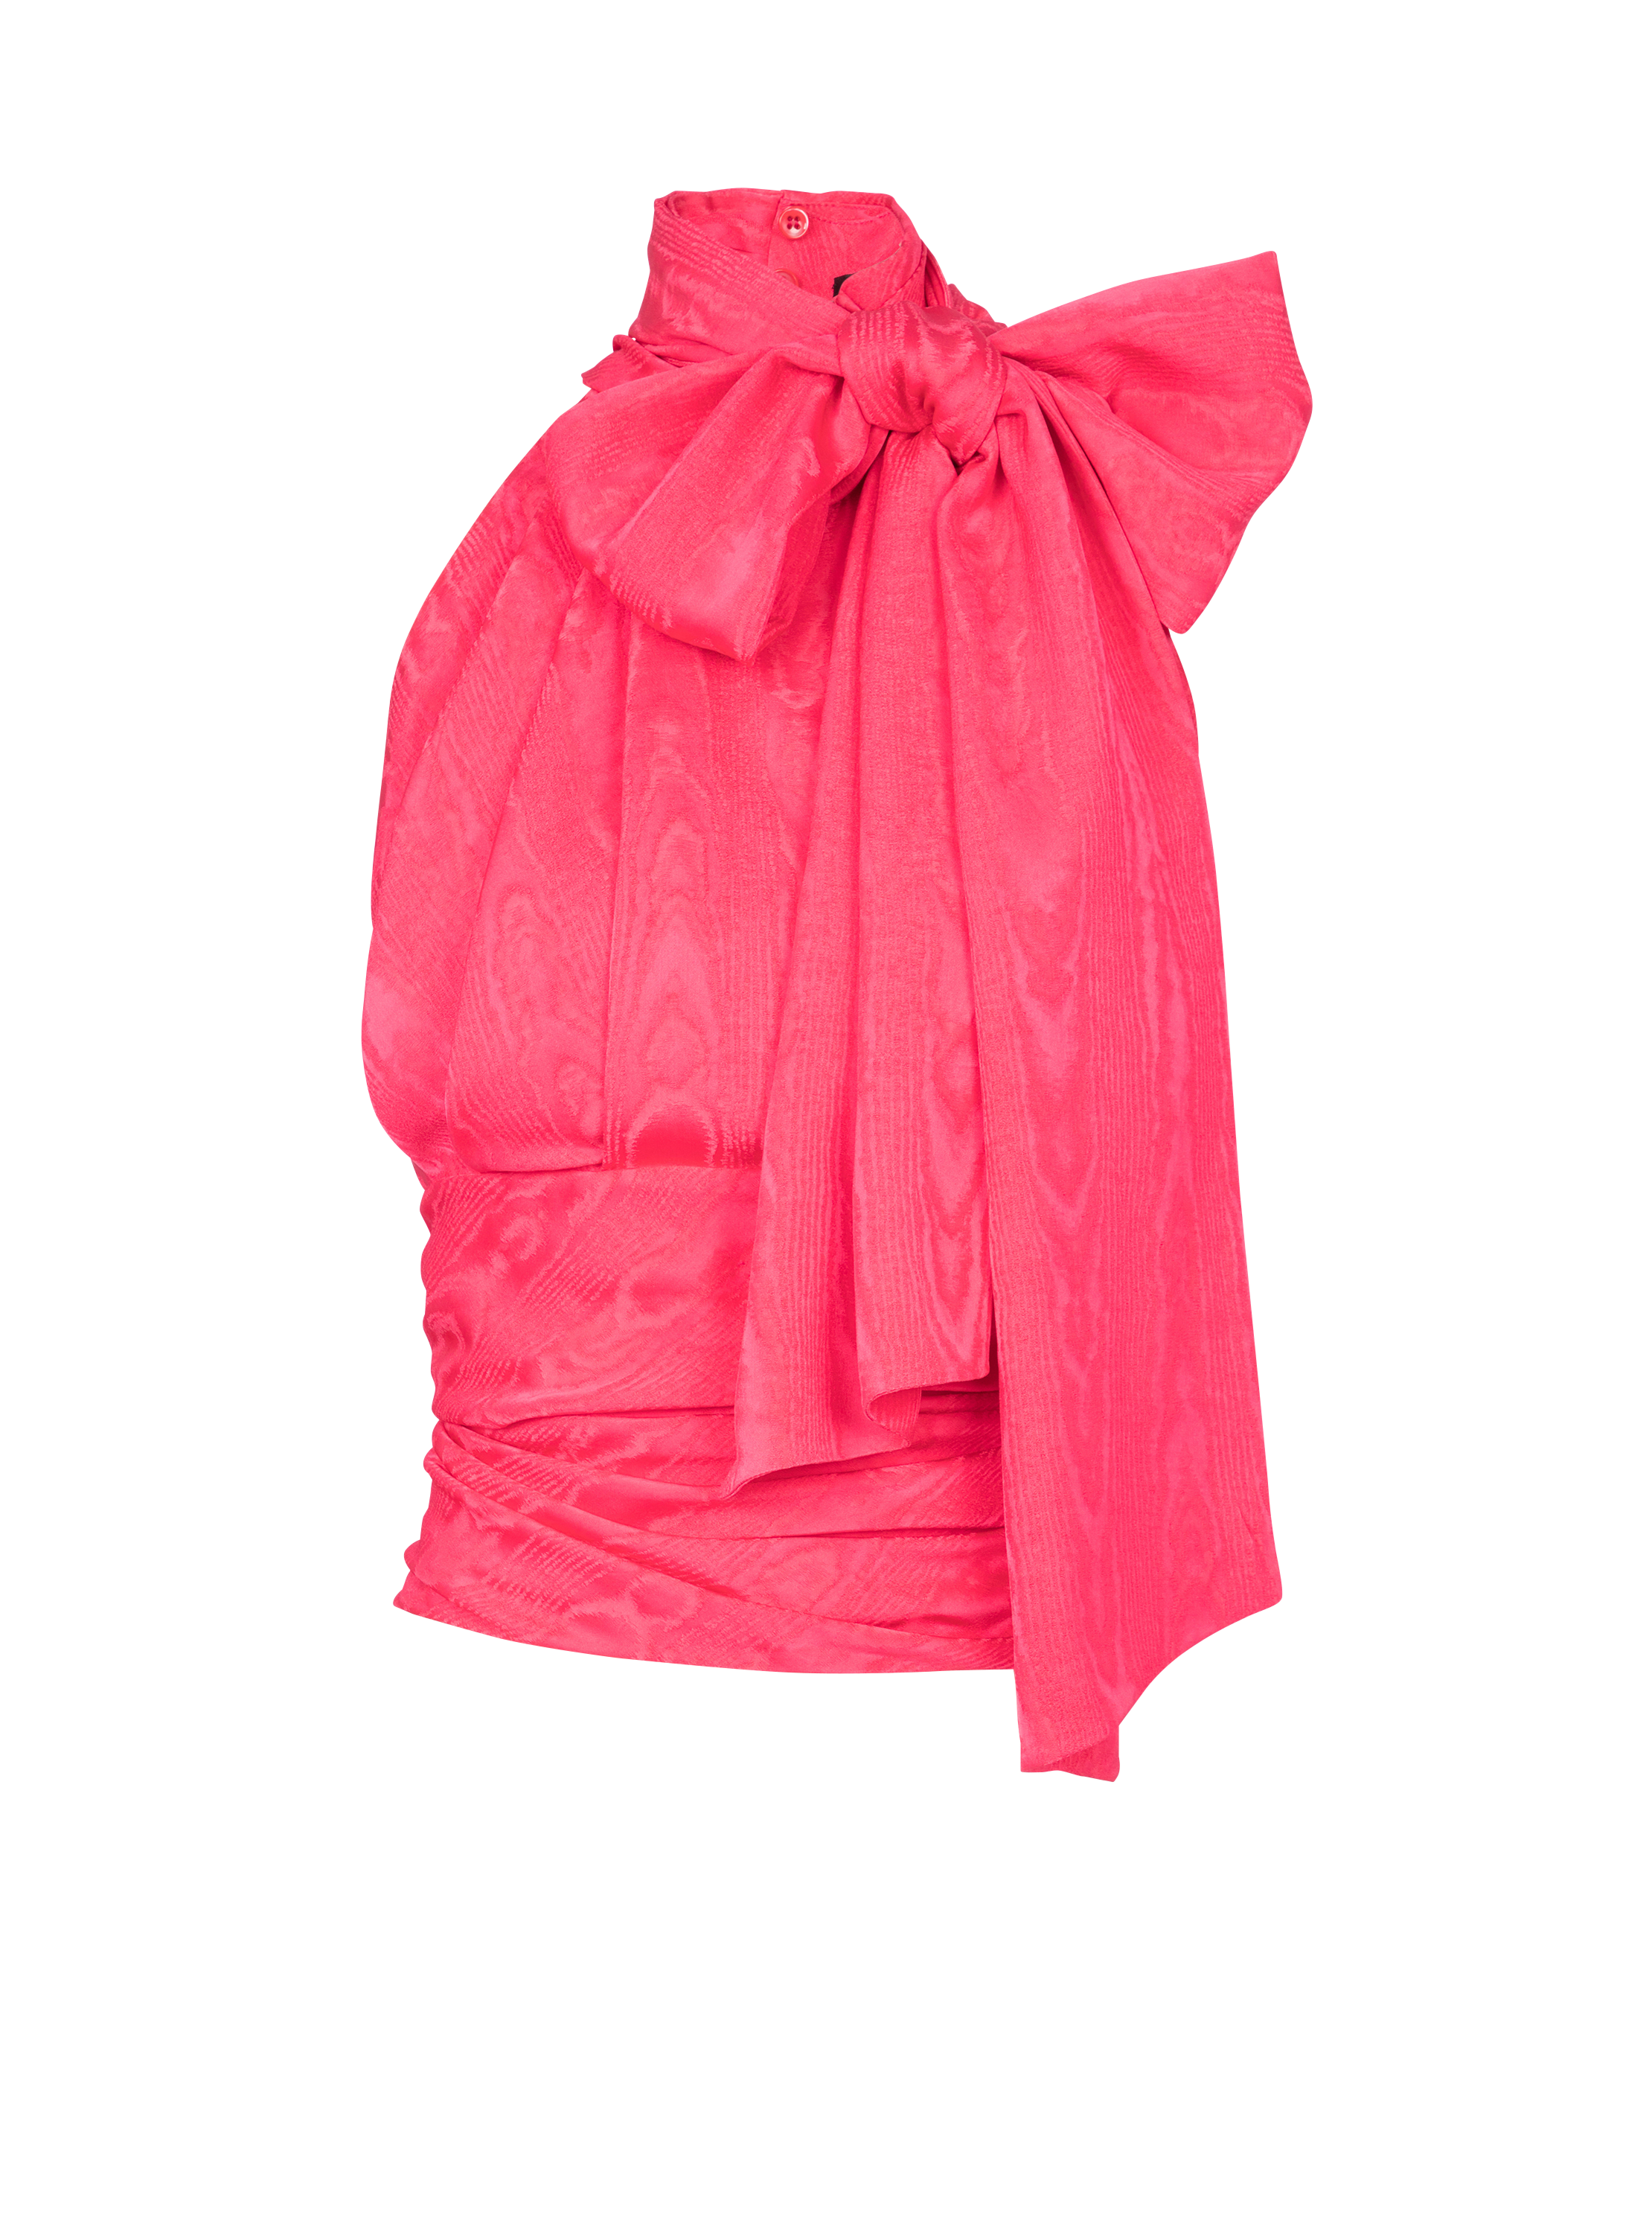 Sleeveless top with draped collar, pink, hi-res